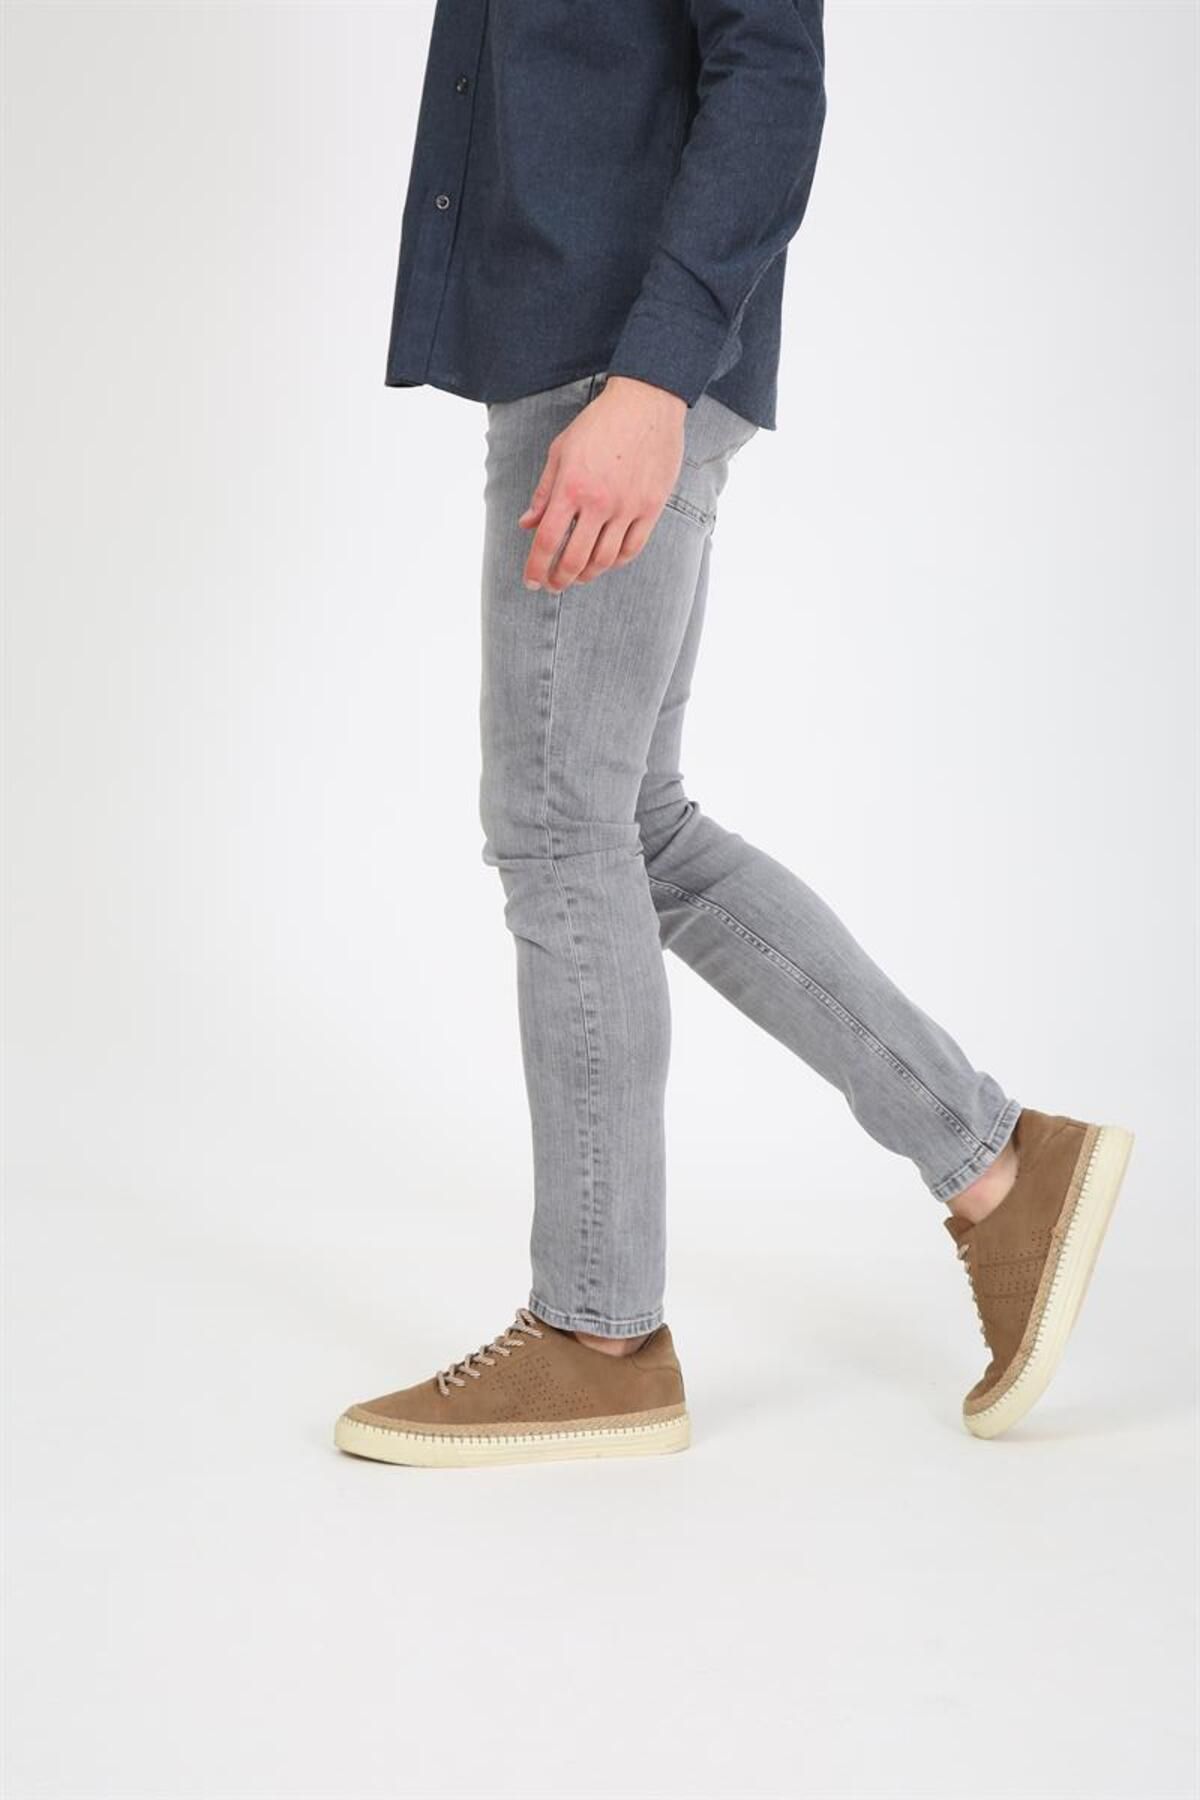 Twister Jeans Erkek Pantolon Panama 627-19 Grey